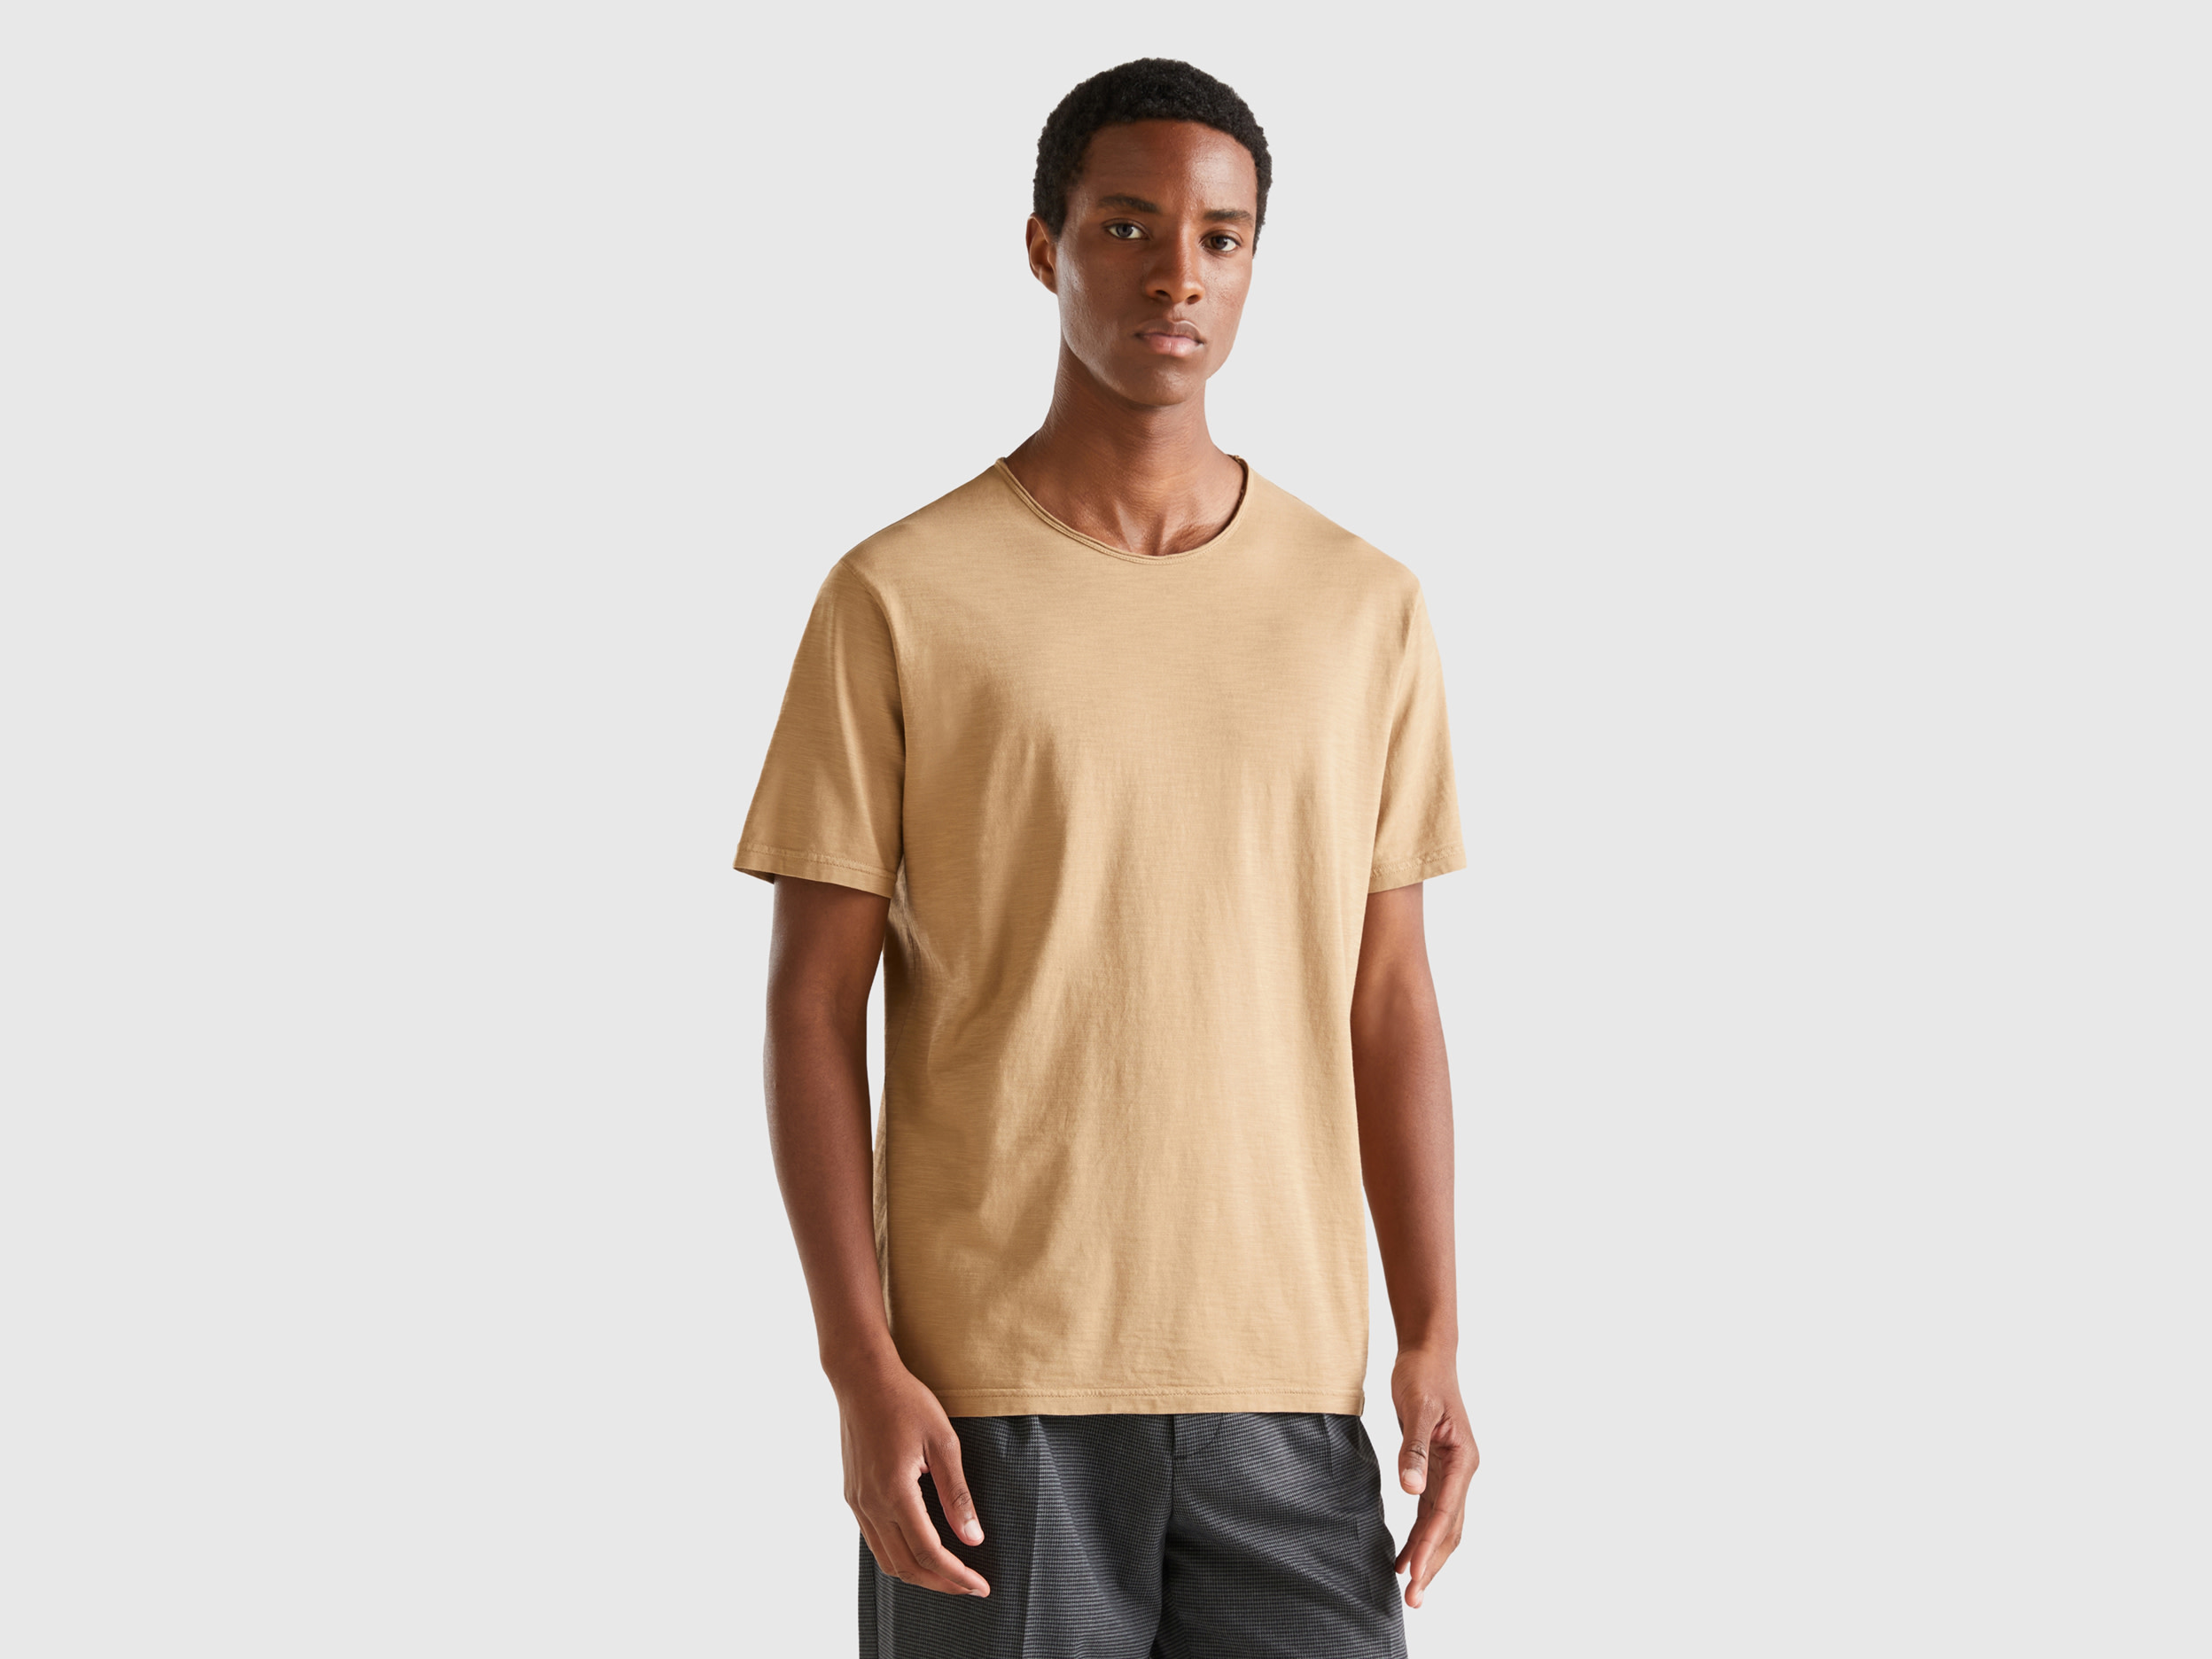 Benetton, Camel T-shirt In Slub Cotton, size XL, Camel, Men